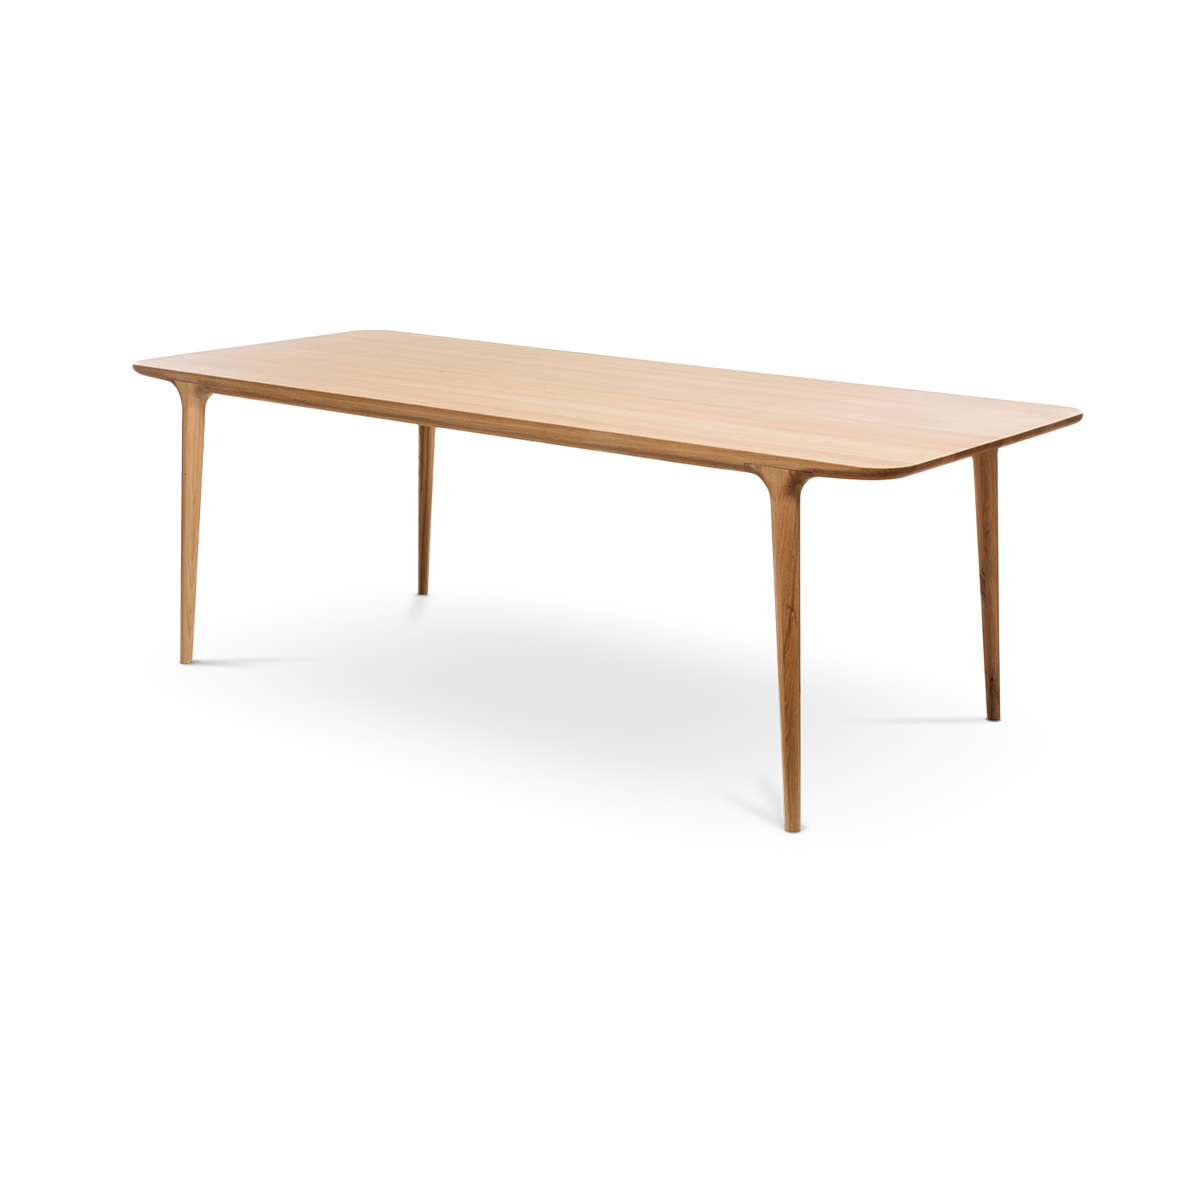 Fawn table houten eettafel naturel - 160 x 90 cm